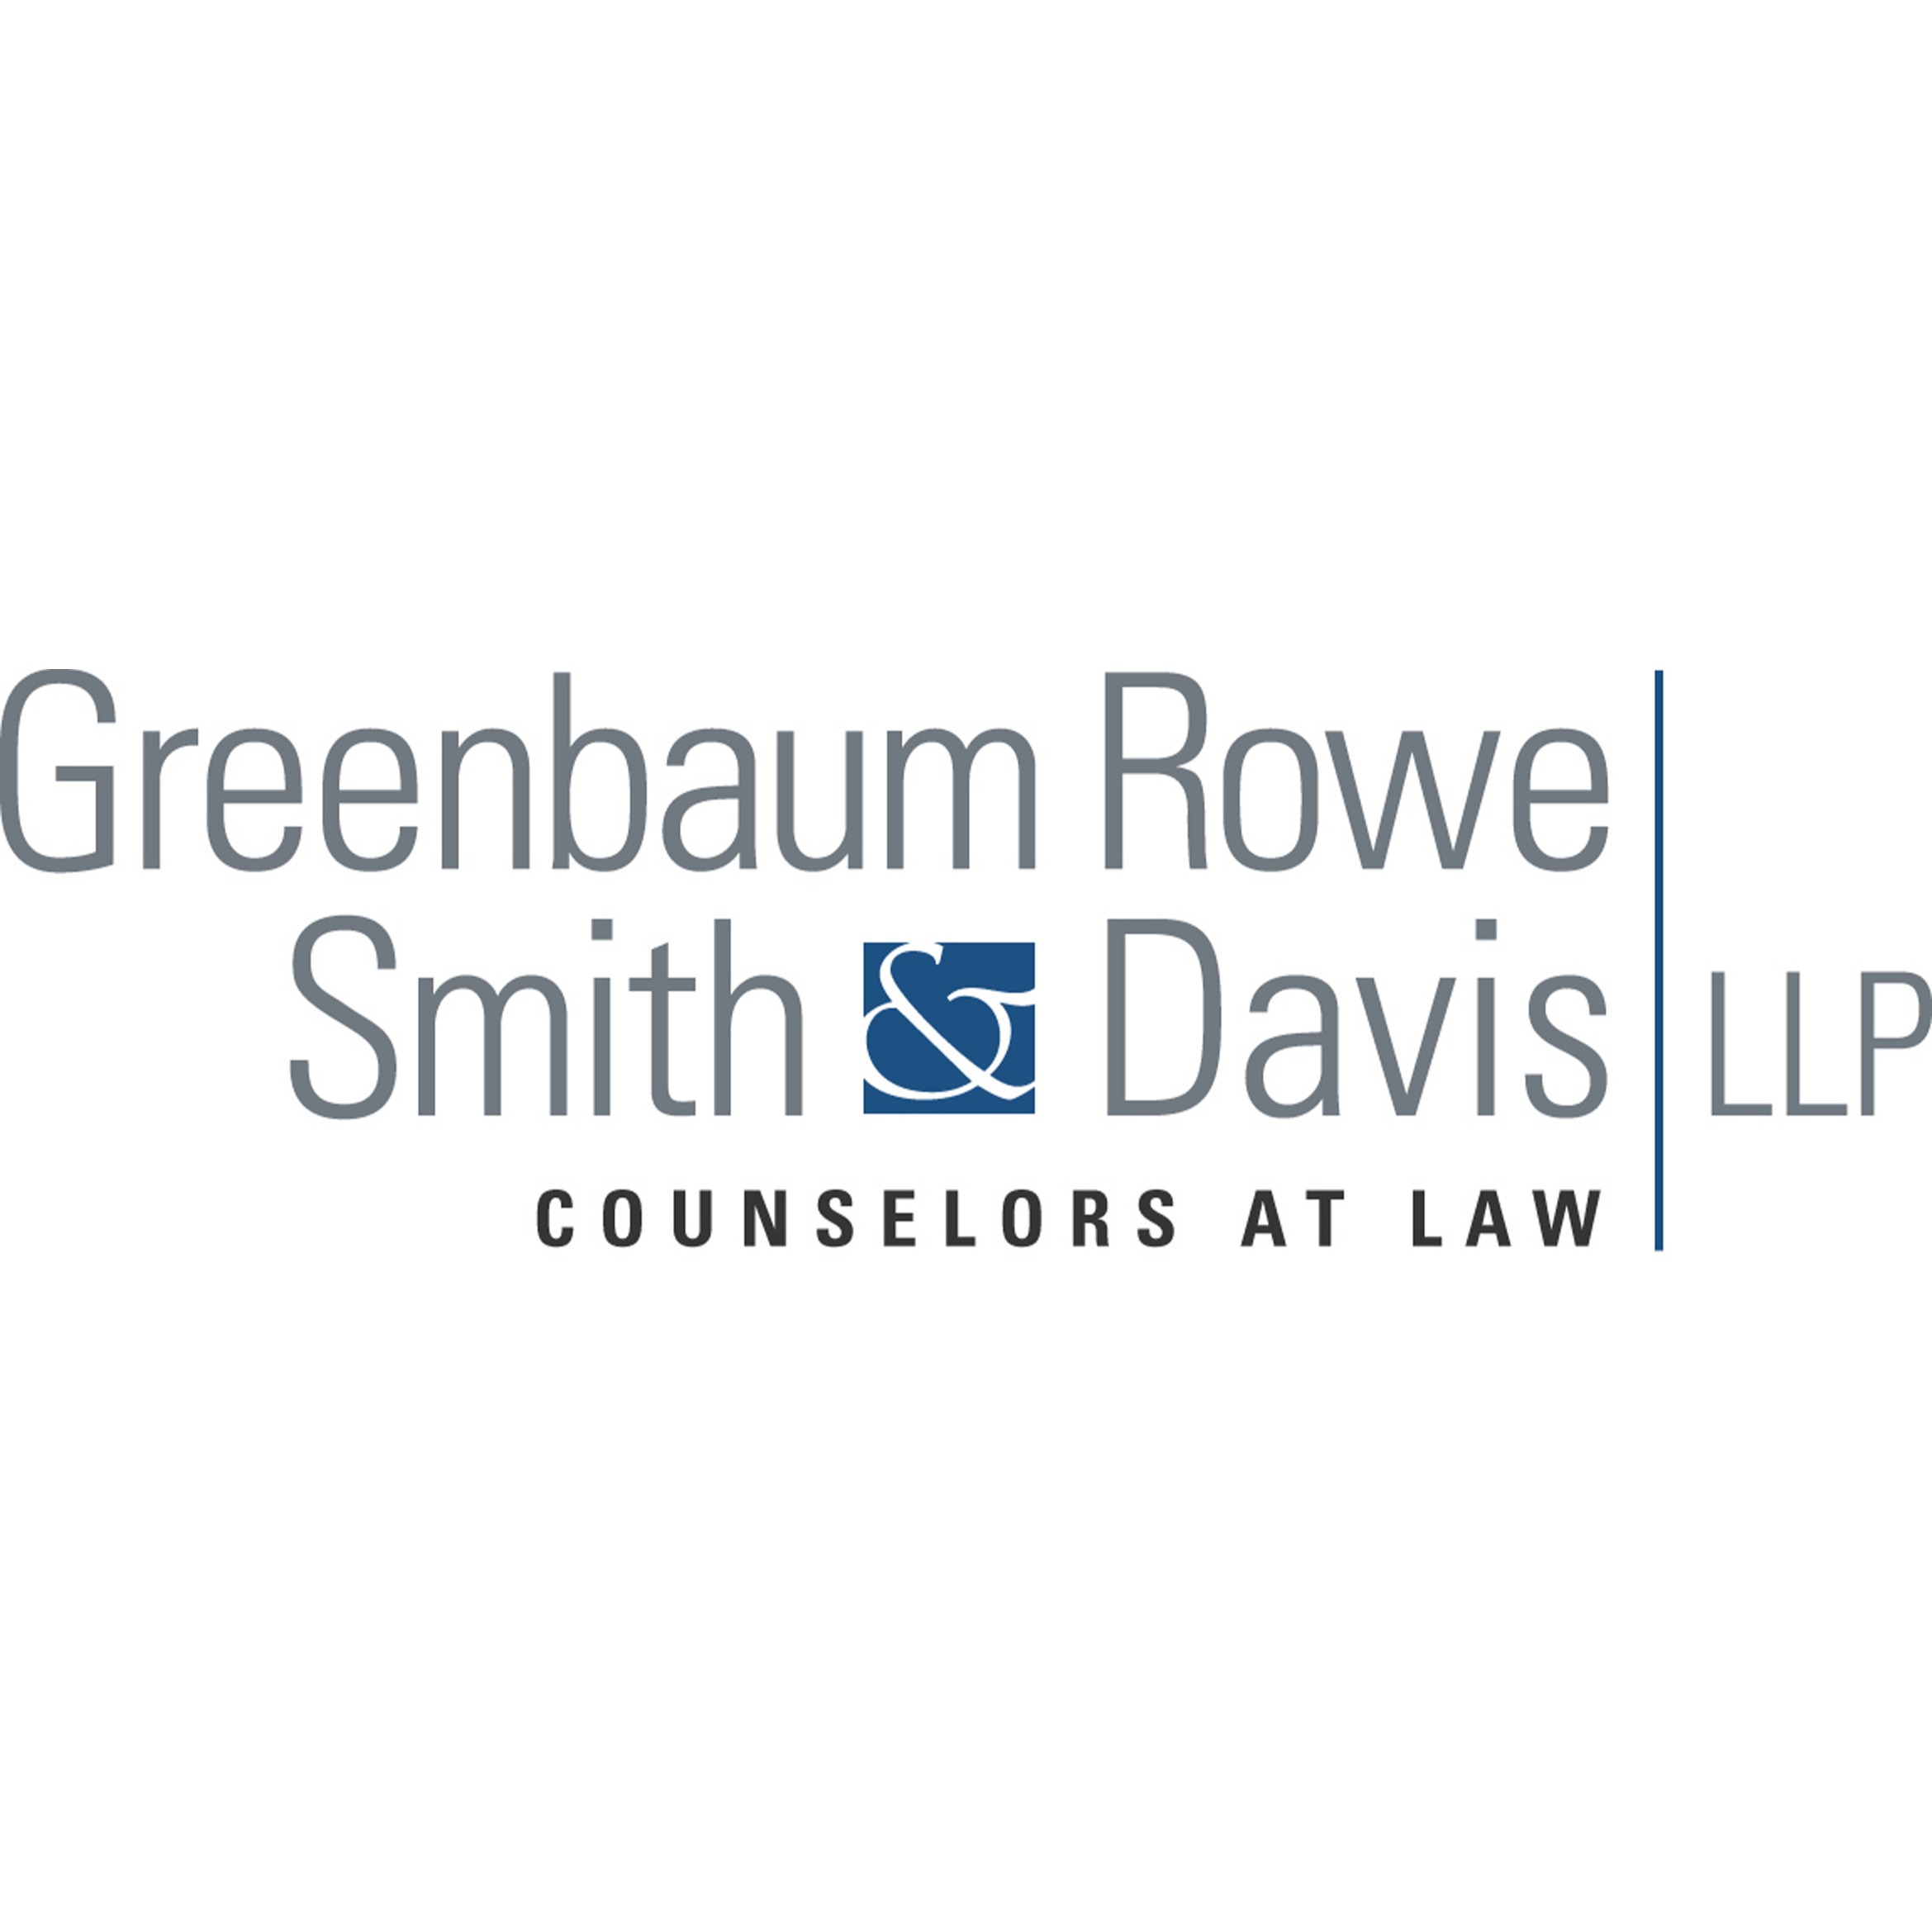 Greenbaum, Rowe, Smith & Davis LLP Iselin (732)549-5600